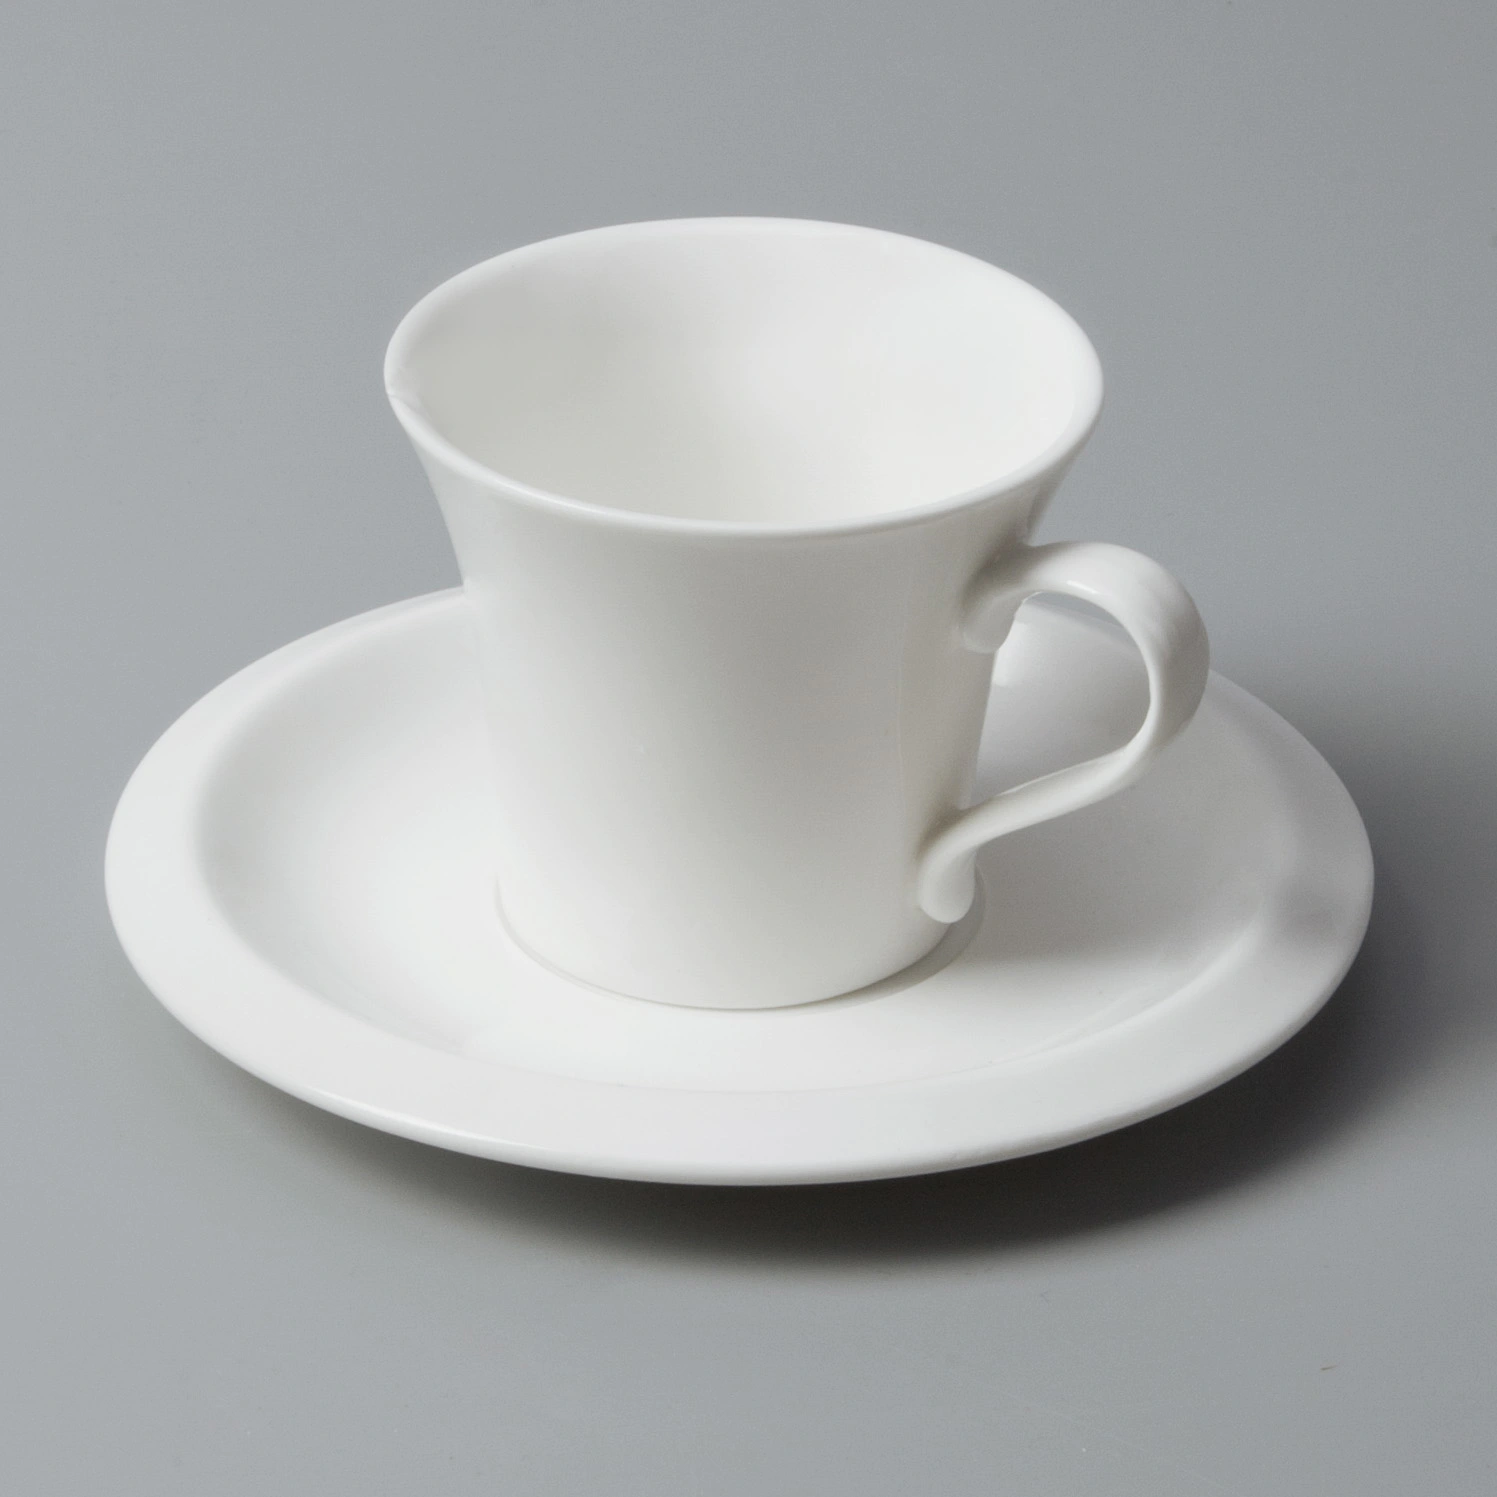 Two Eight Brand white white porcelain tableware glaze sample